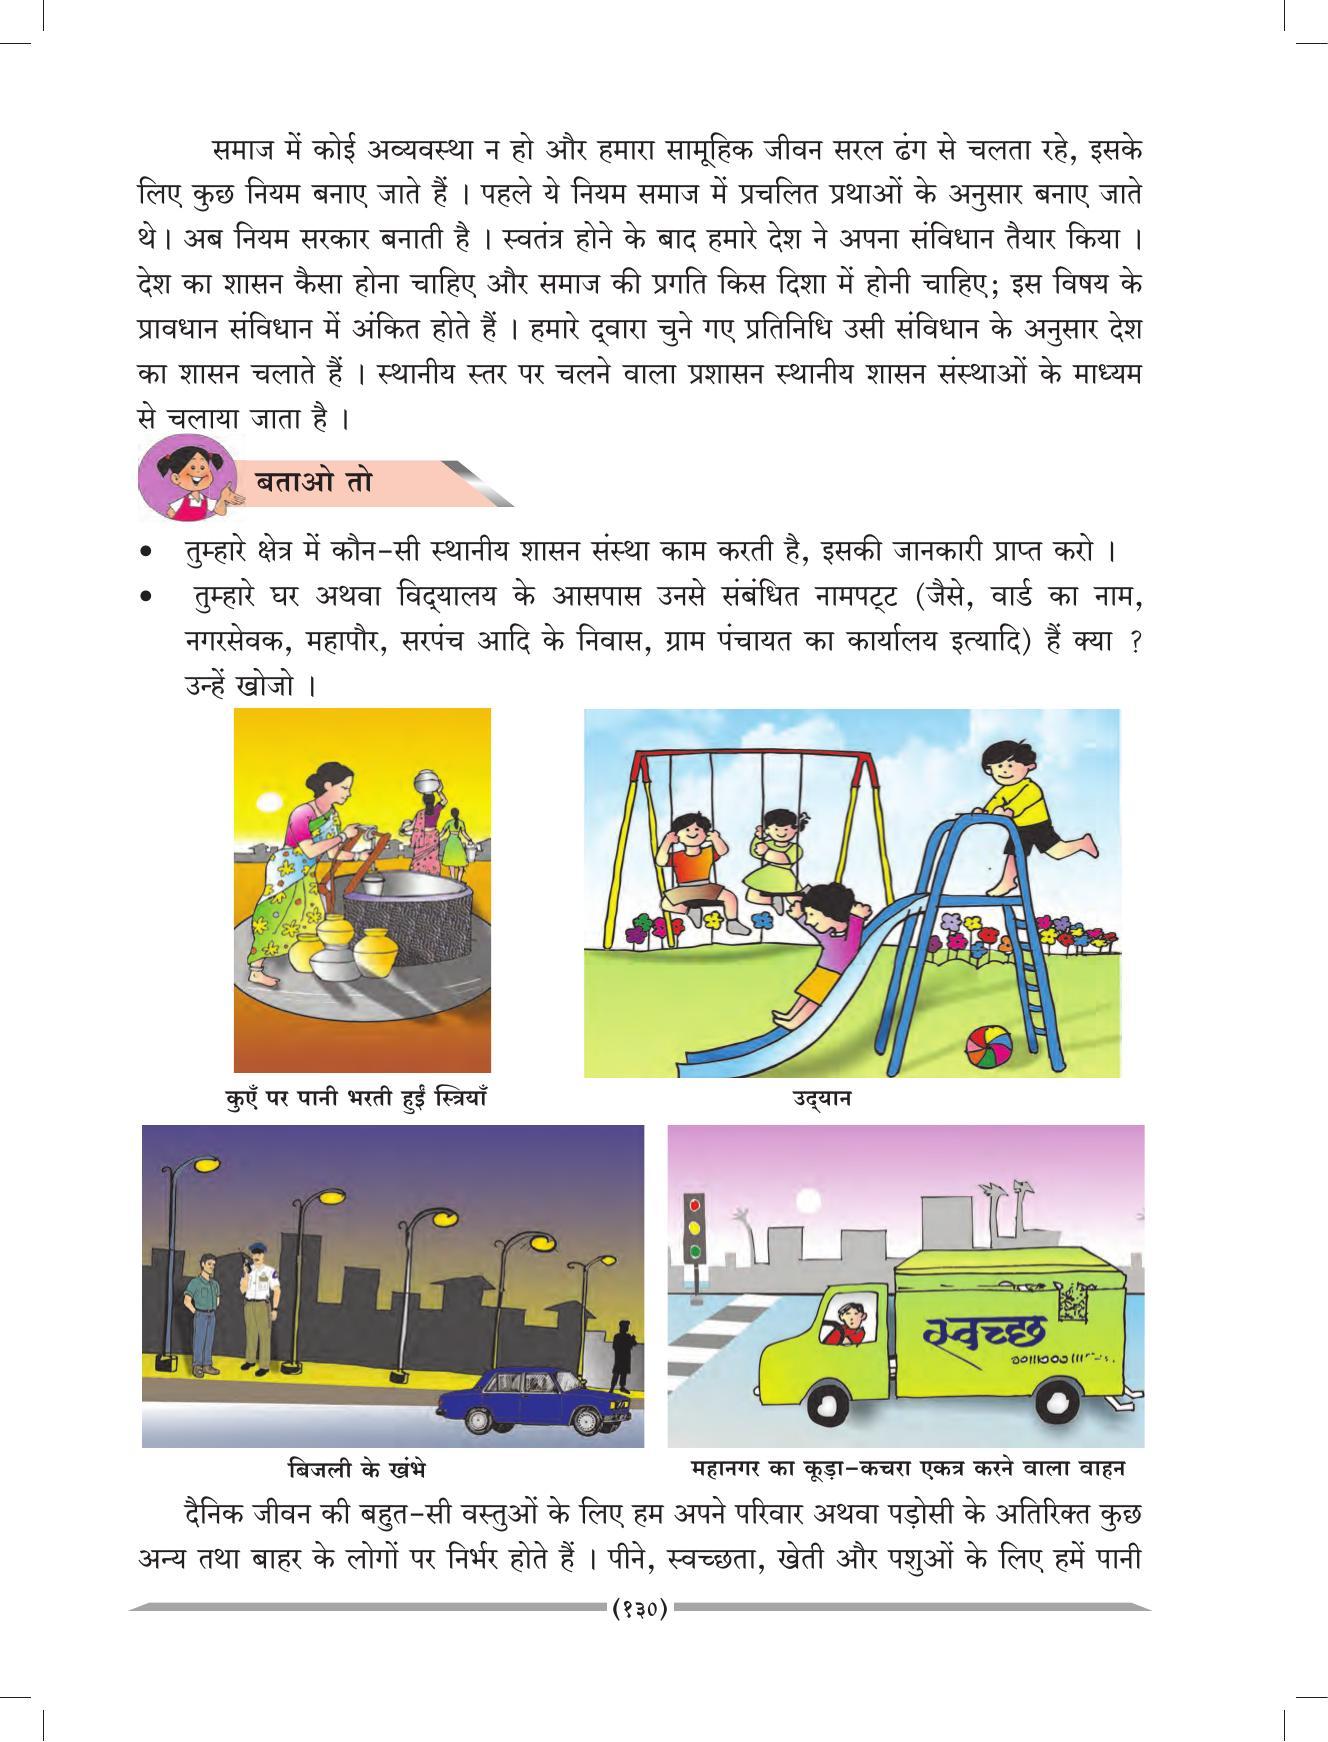 Maharashtra Board Class 4 EVS 1 (Hindi Medium) Textbook - Page 140